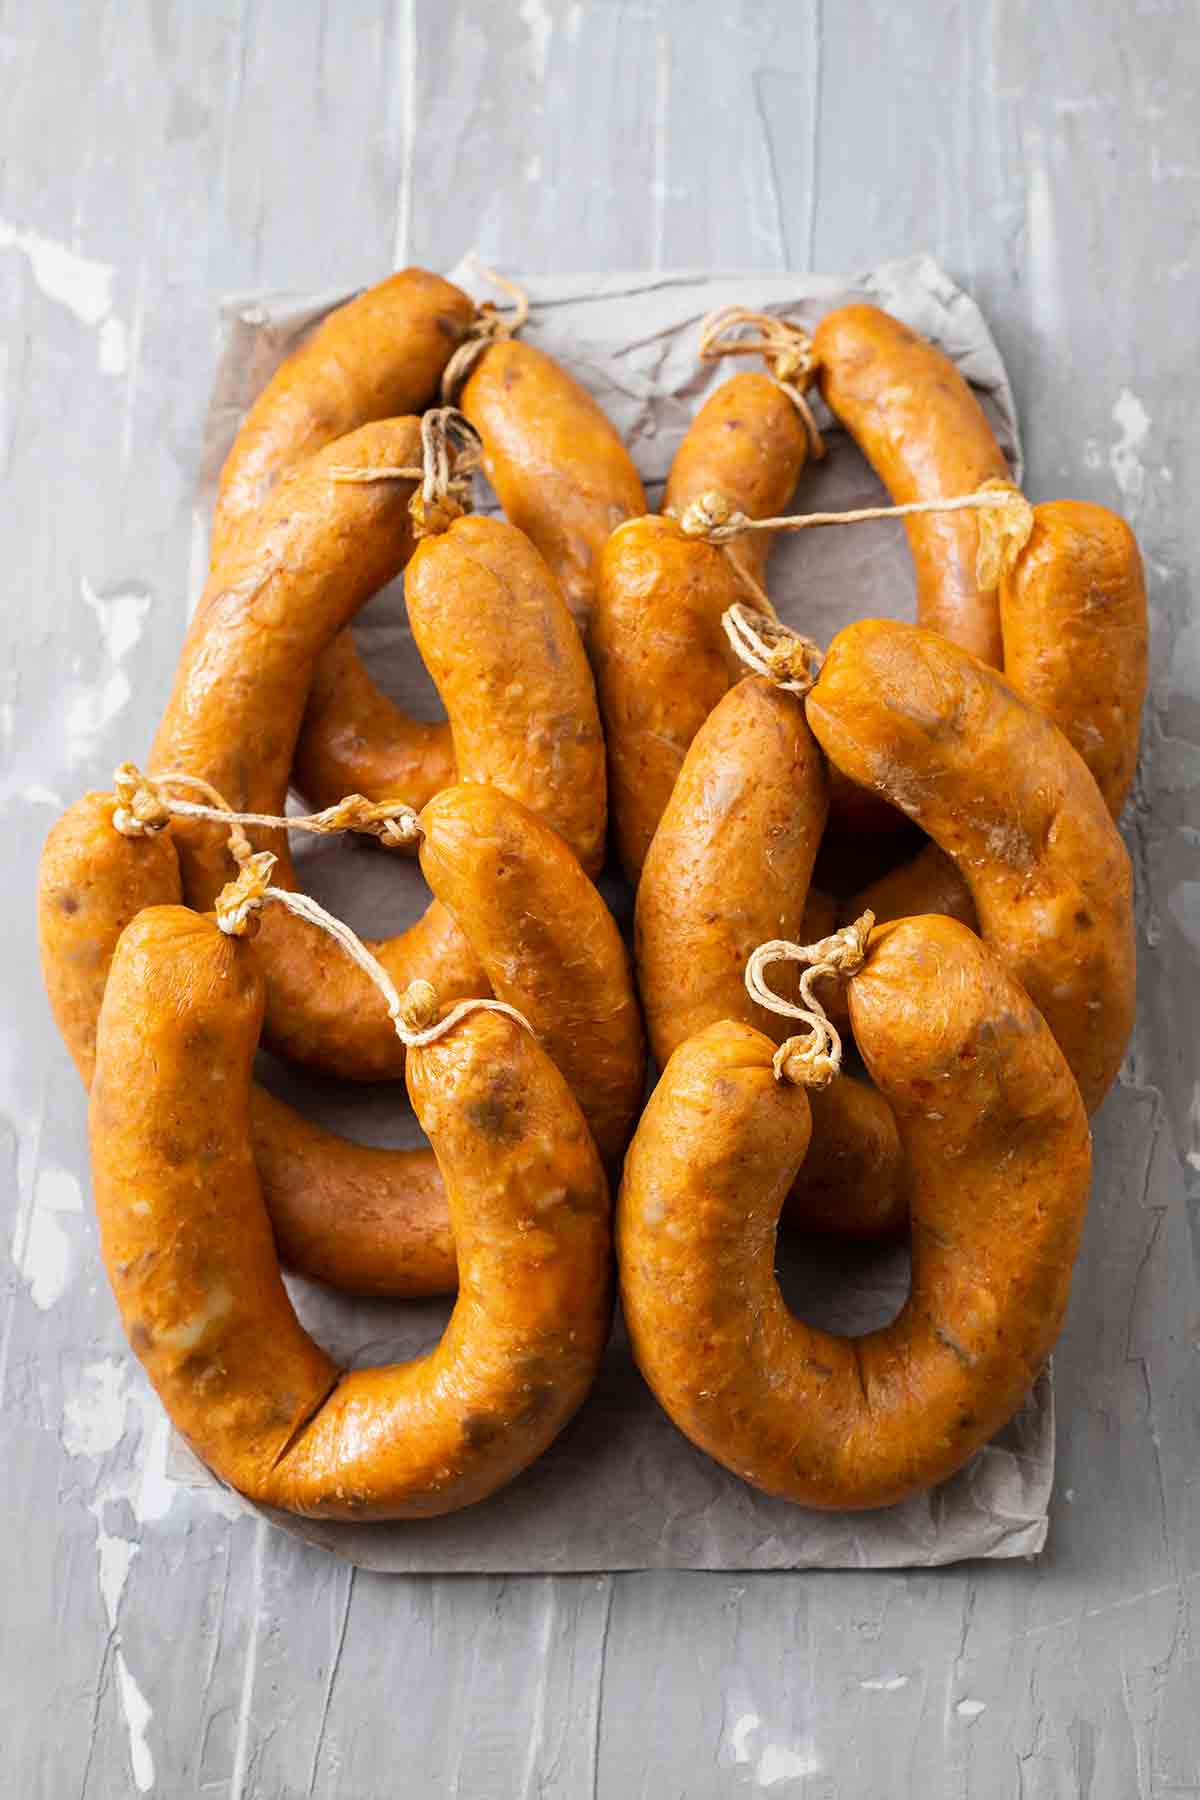 Eight links of alheira sausage